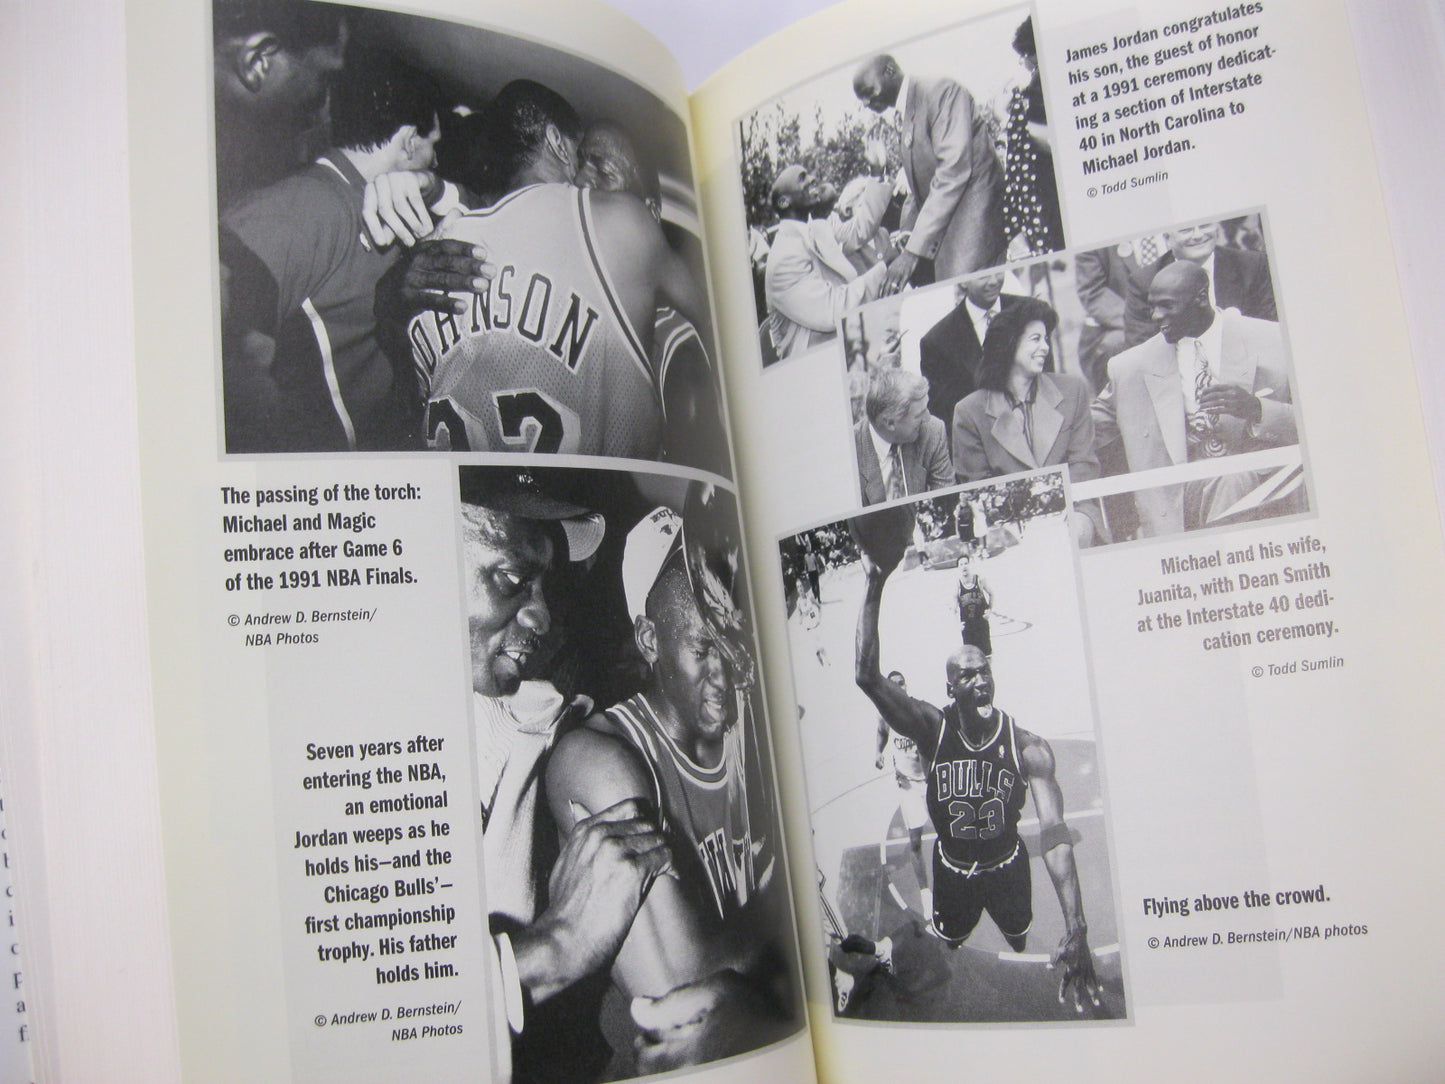 Playing for Keeps: Michael Jordan & The World He Made by David Halberstam